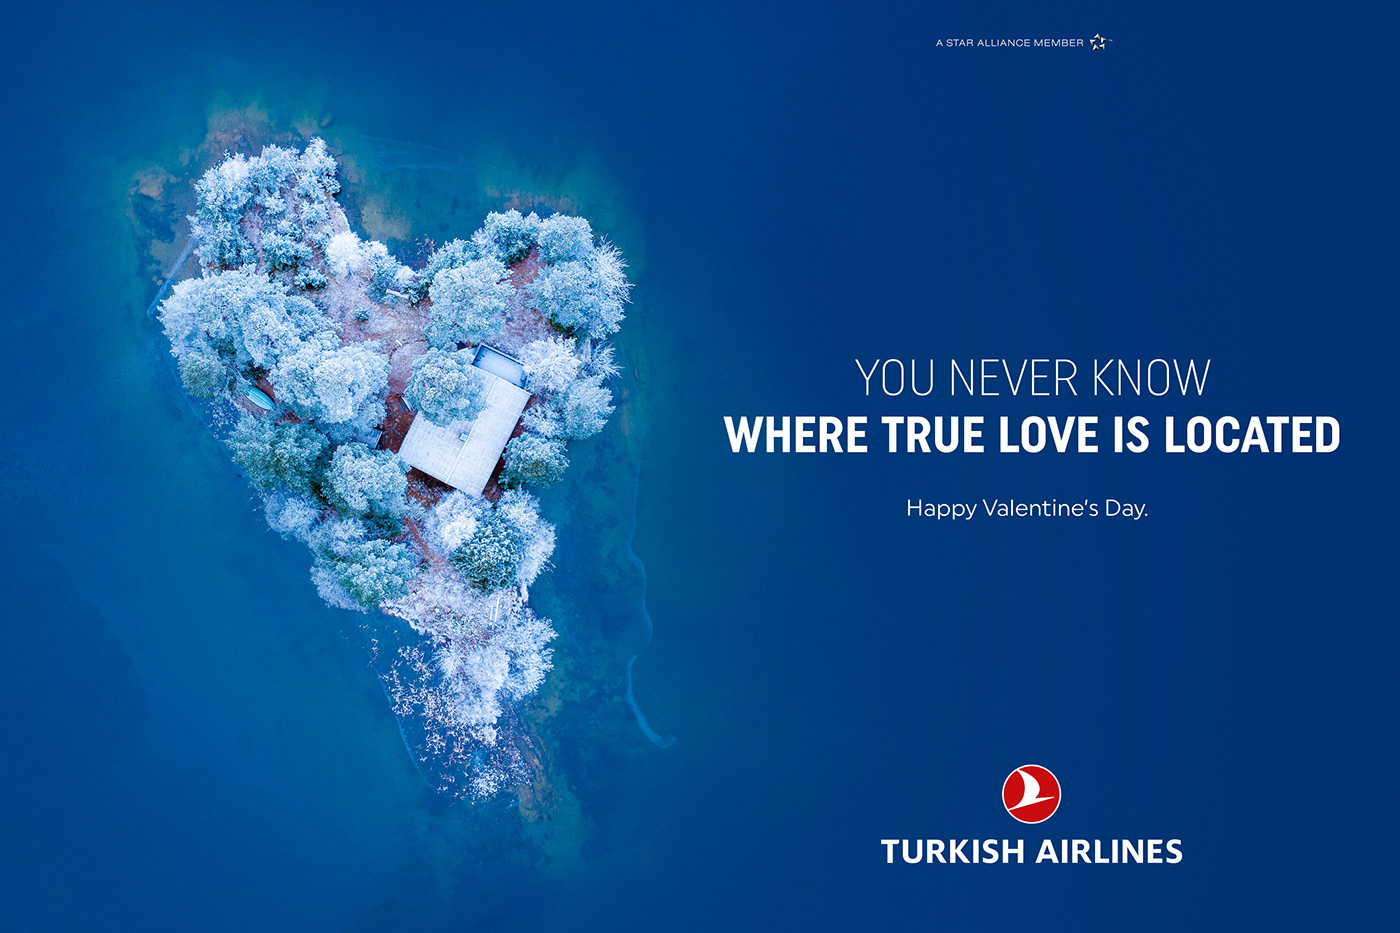 Turkish Airlines' Valentine's Day campaign